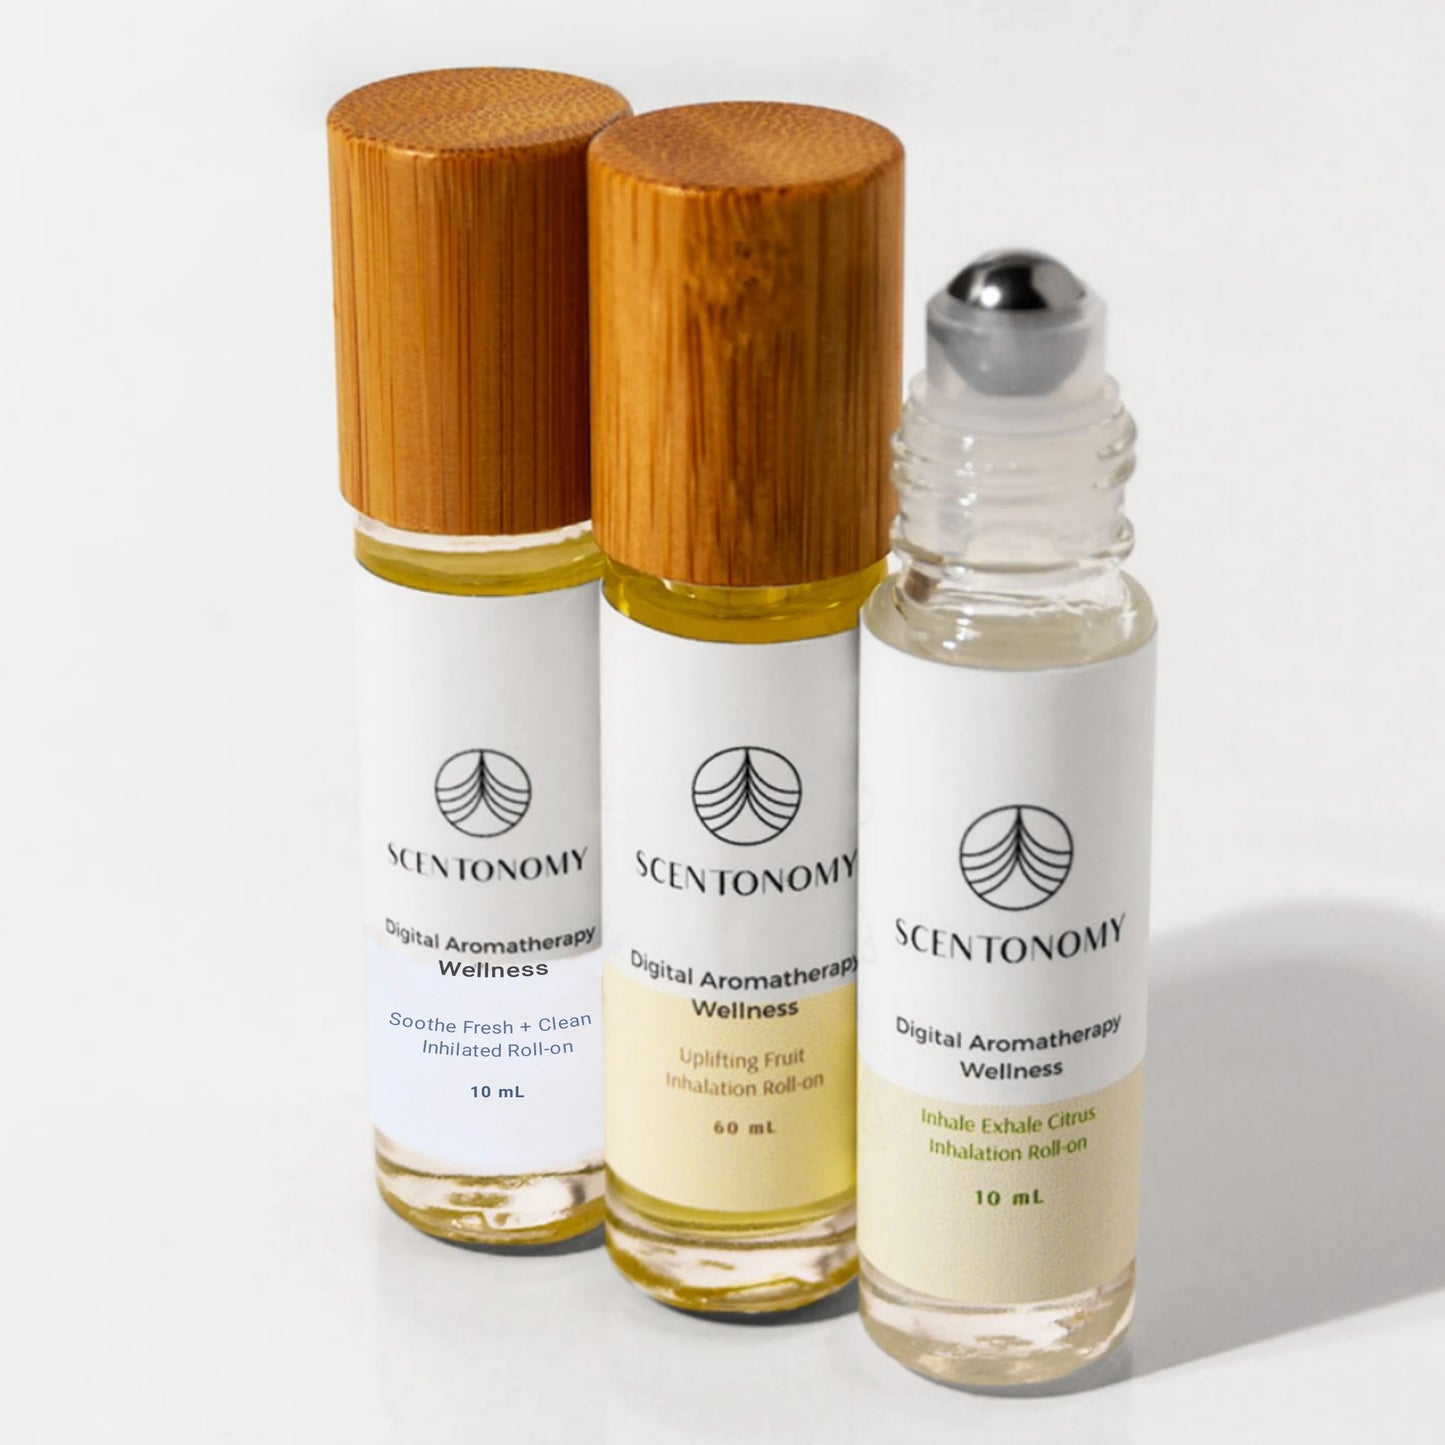 Scentonomy Uplifting Spice & Wood Aromatherapy